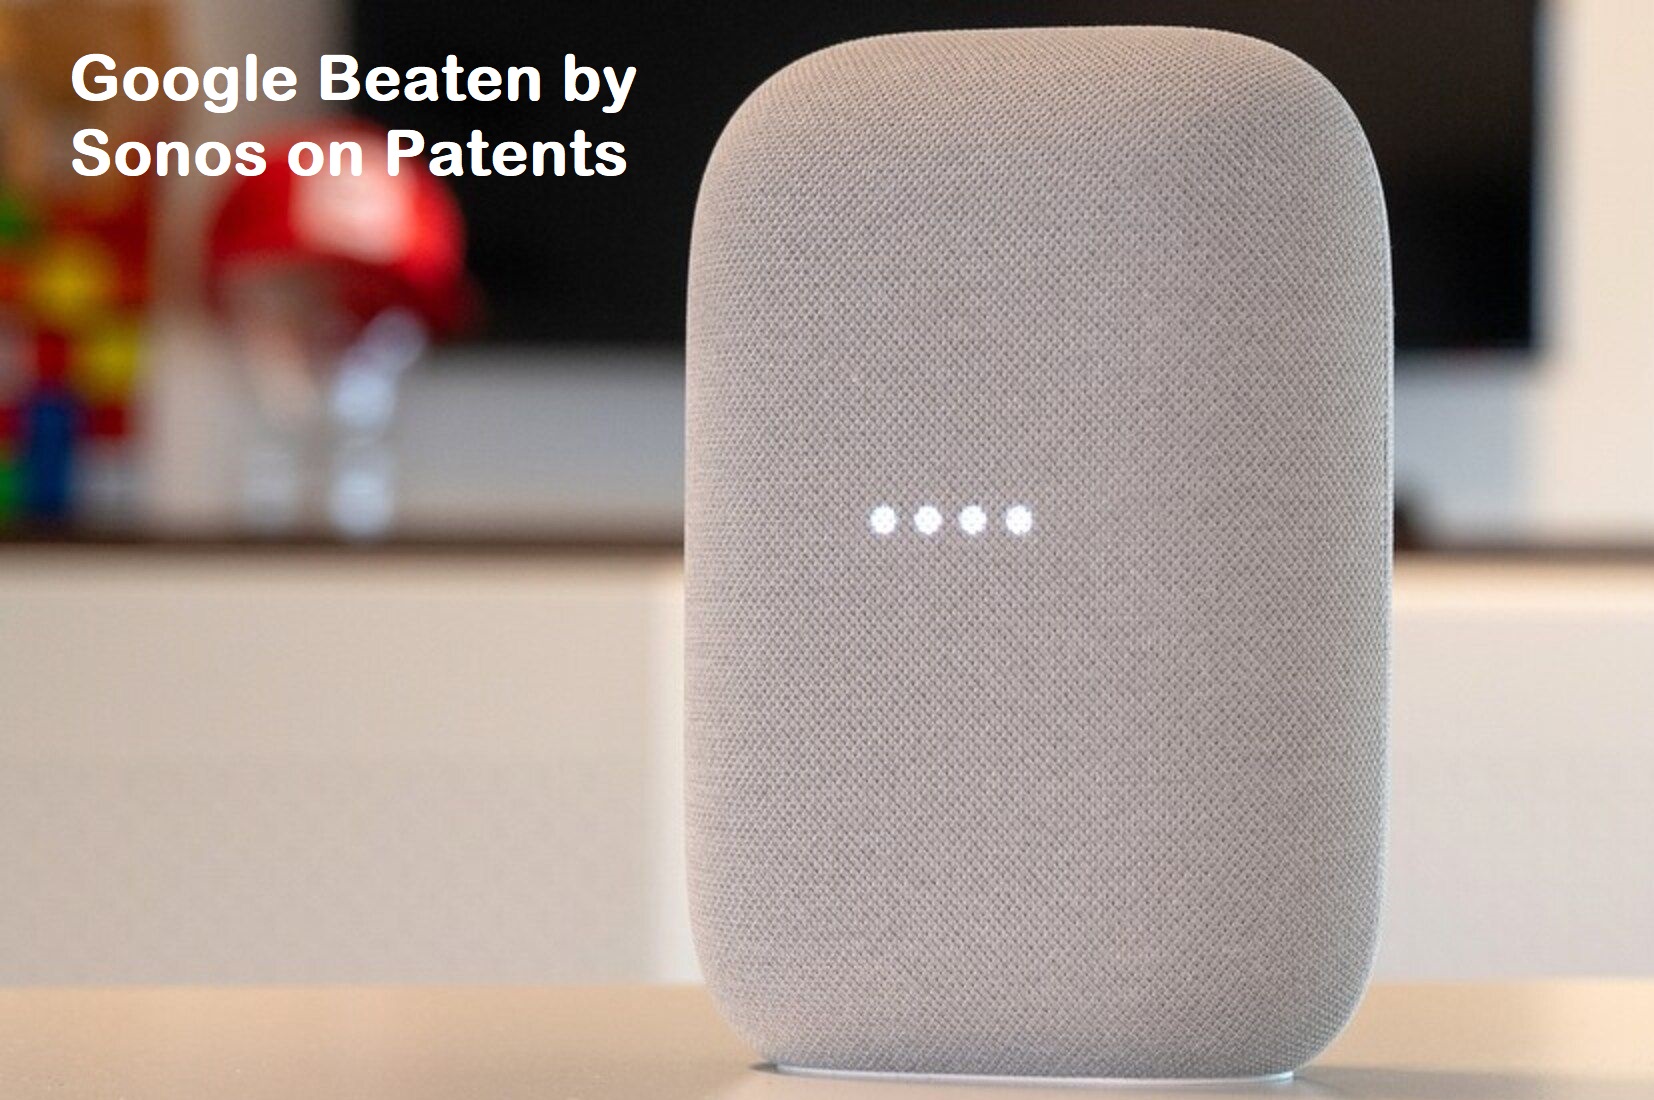 Google Beaten by Sonos on Patents